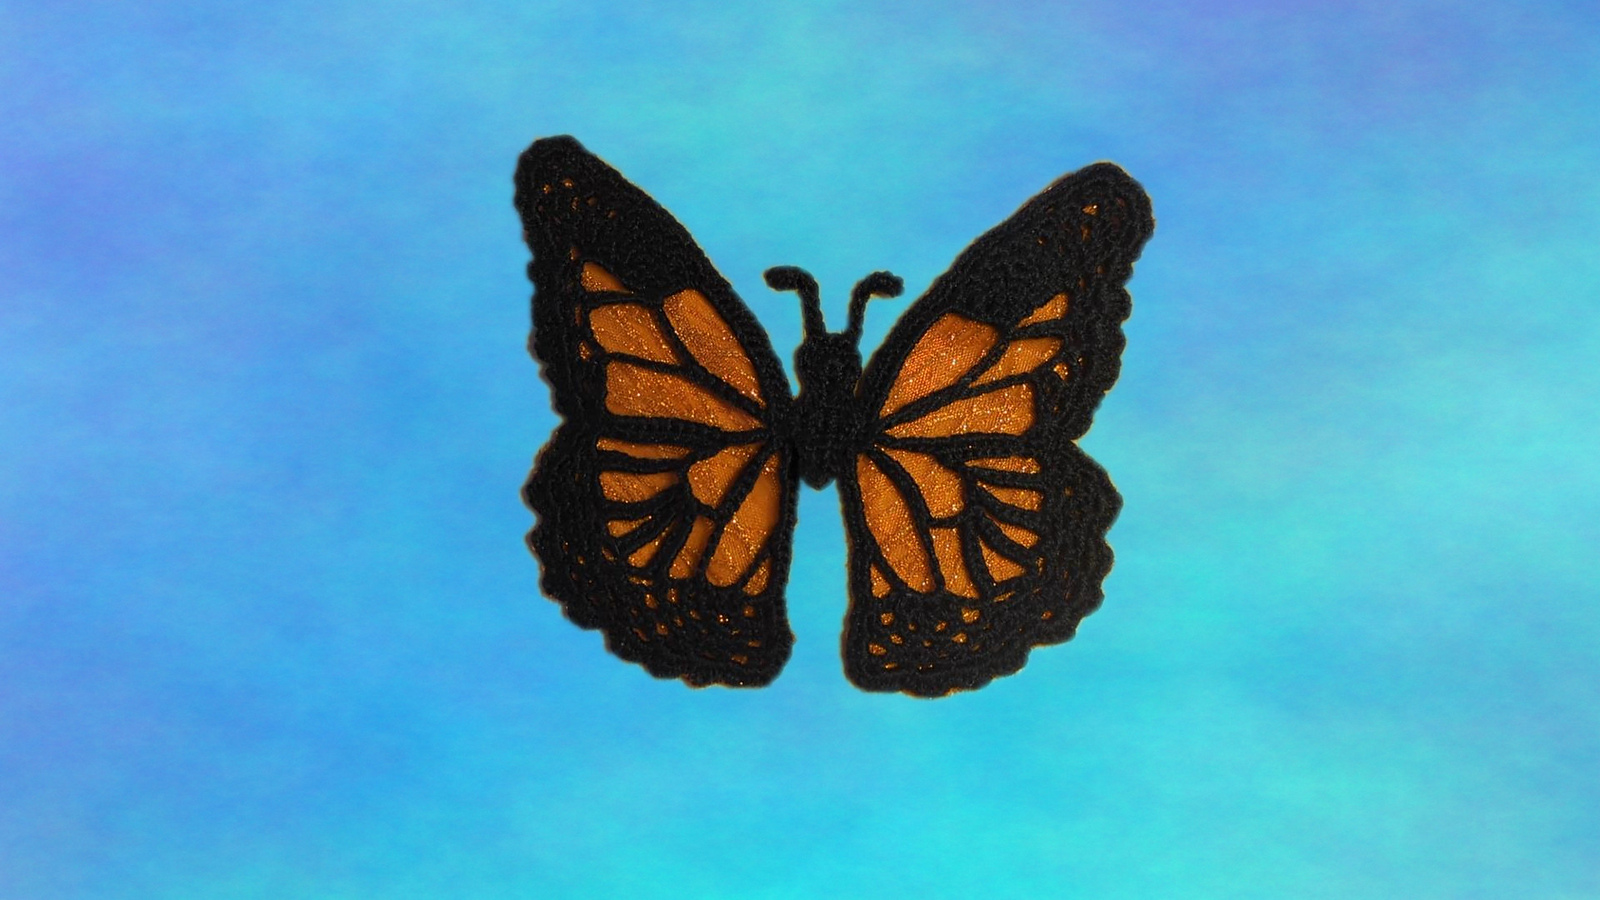 Marvelous Monarchs! Crochet a Lace Butterfly Applique Designed By Liz Shafer